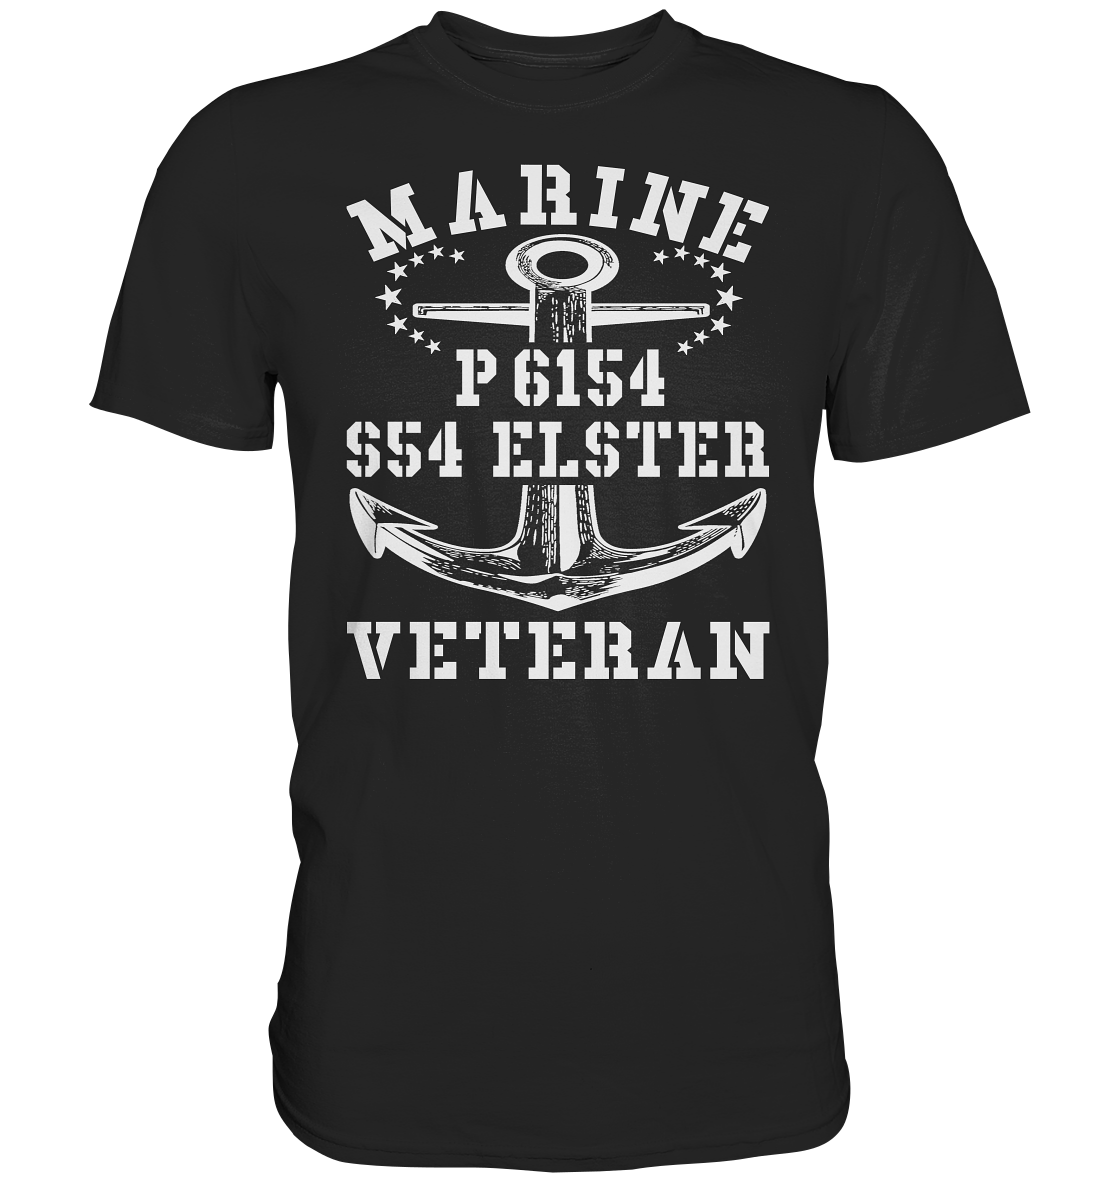 P6154 S54 ELSTER Marine Veteran - Premium Shirt